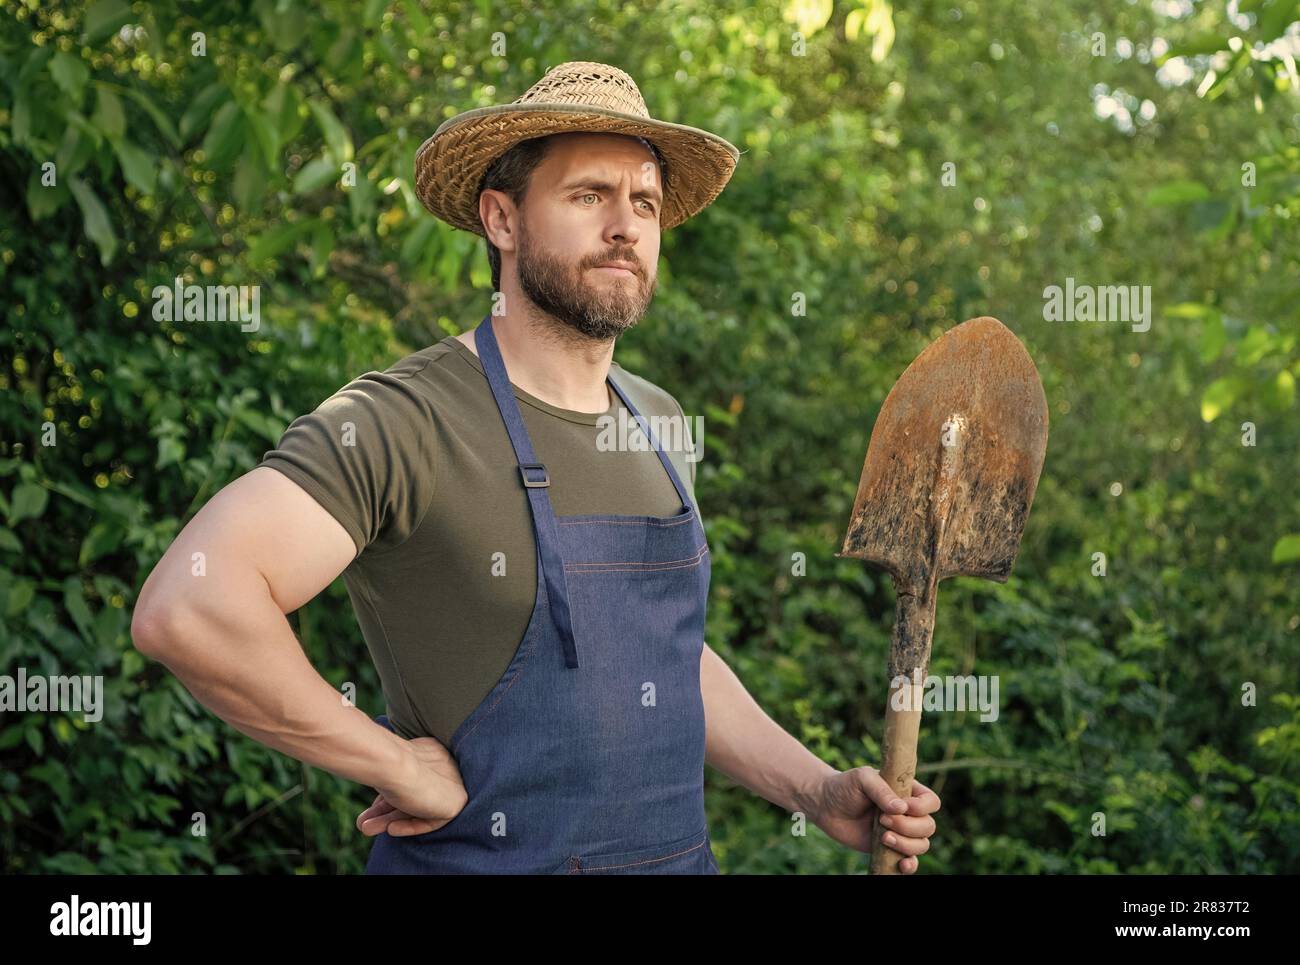 Thoughtful farmer man in farmers hat and gardening apron holding garden shovel Stock Photo